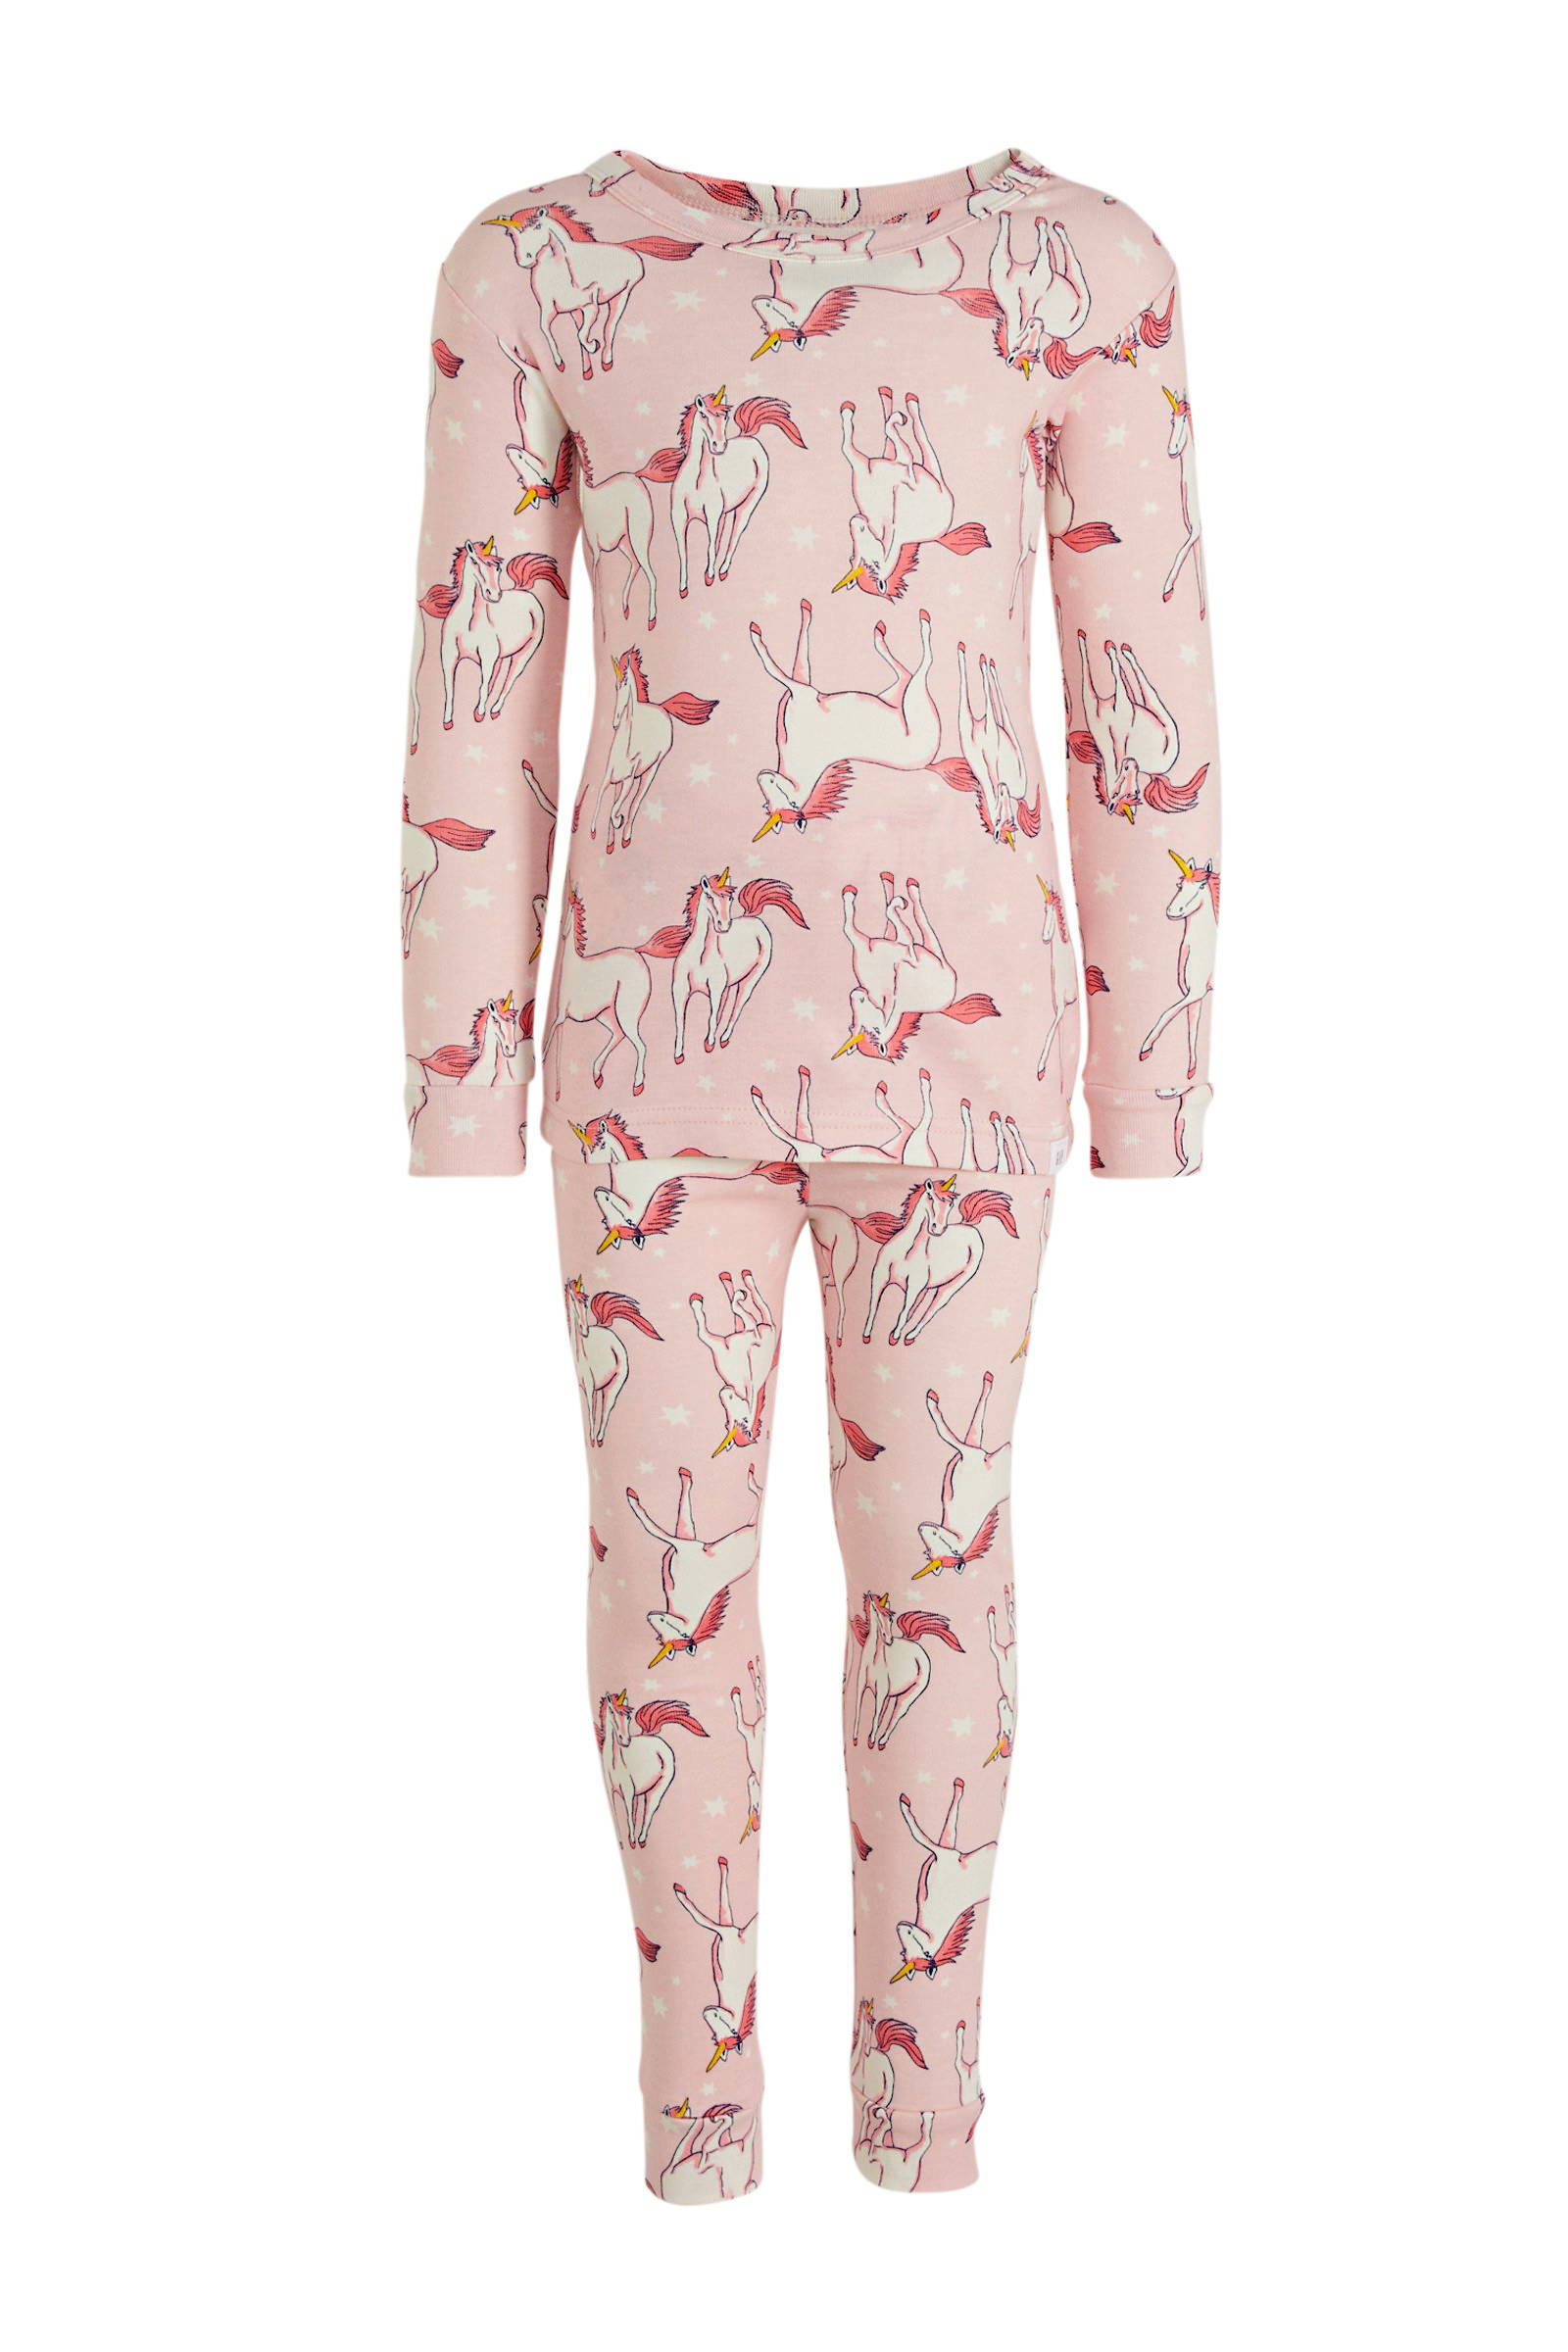 Uniseks babypyjamas voor peuters Amazon Kleding Nachtmode Pyjamas 